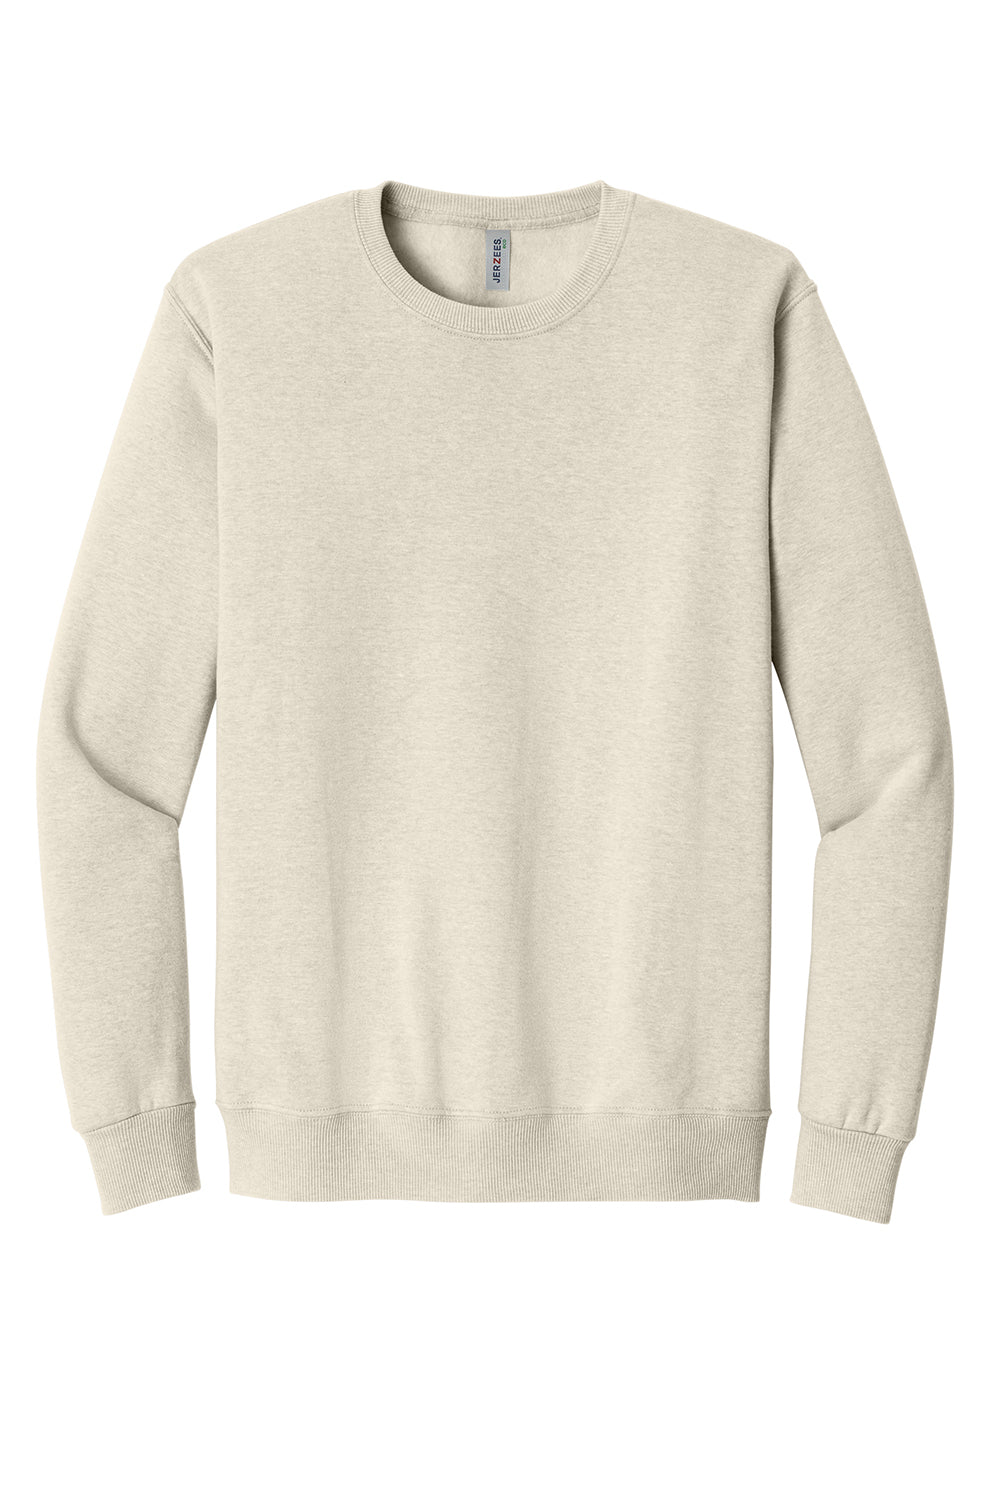 Jerzees 701M Mens Eco Premium Crewneck Sweatshirt Heather Sweet Cream Flat Front